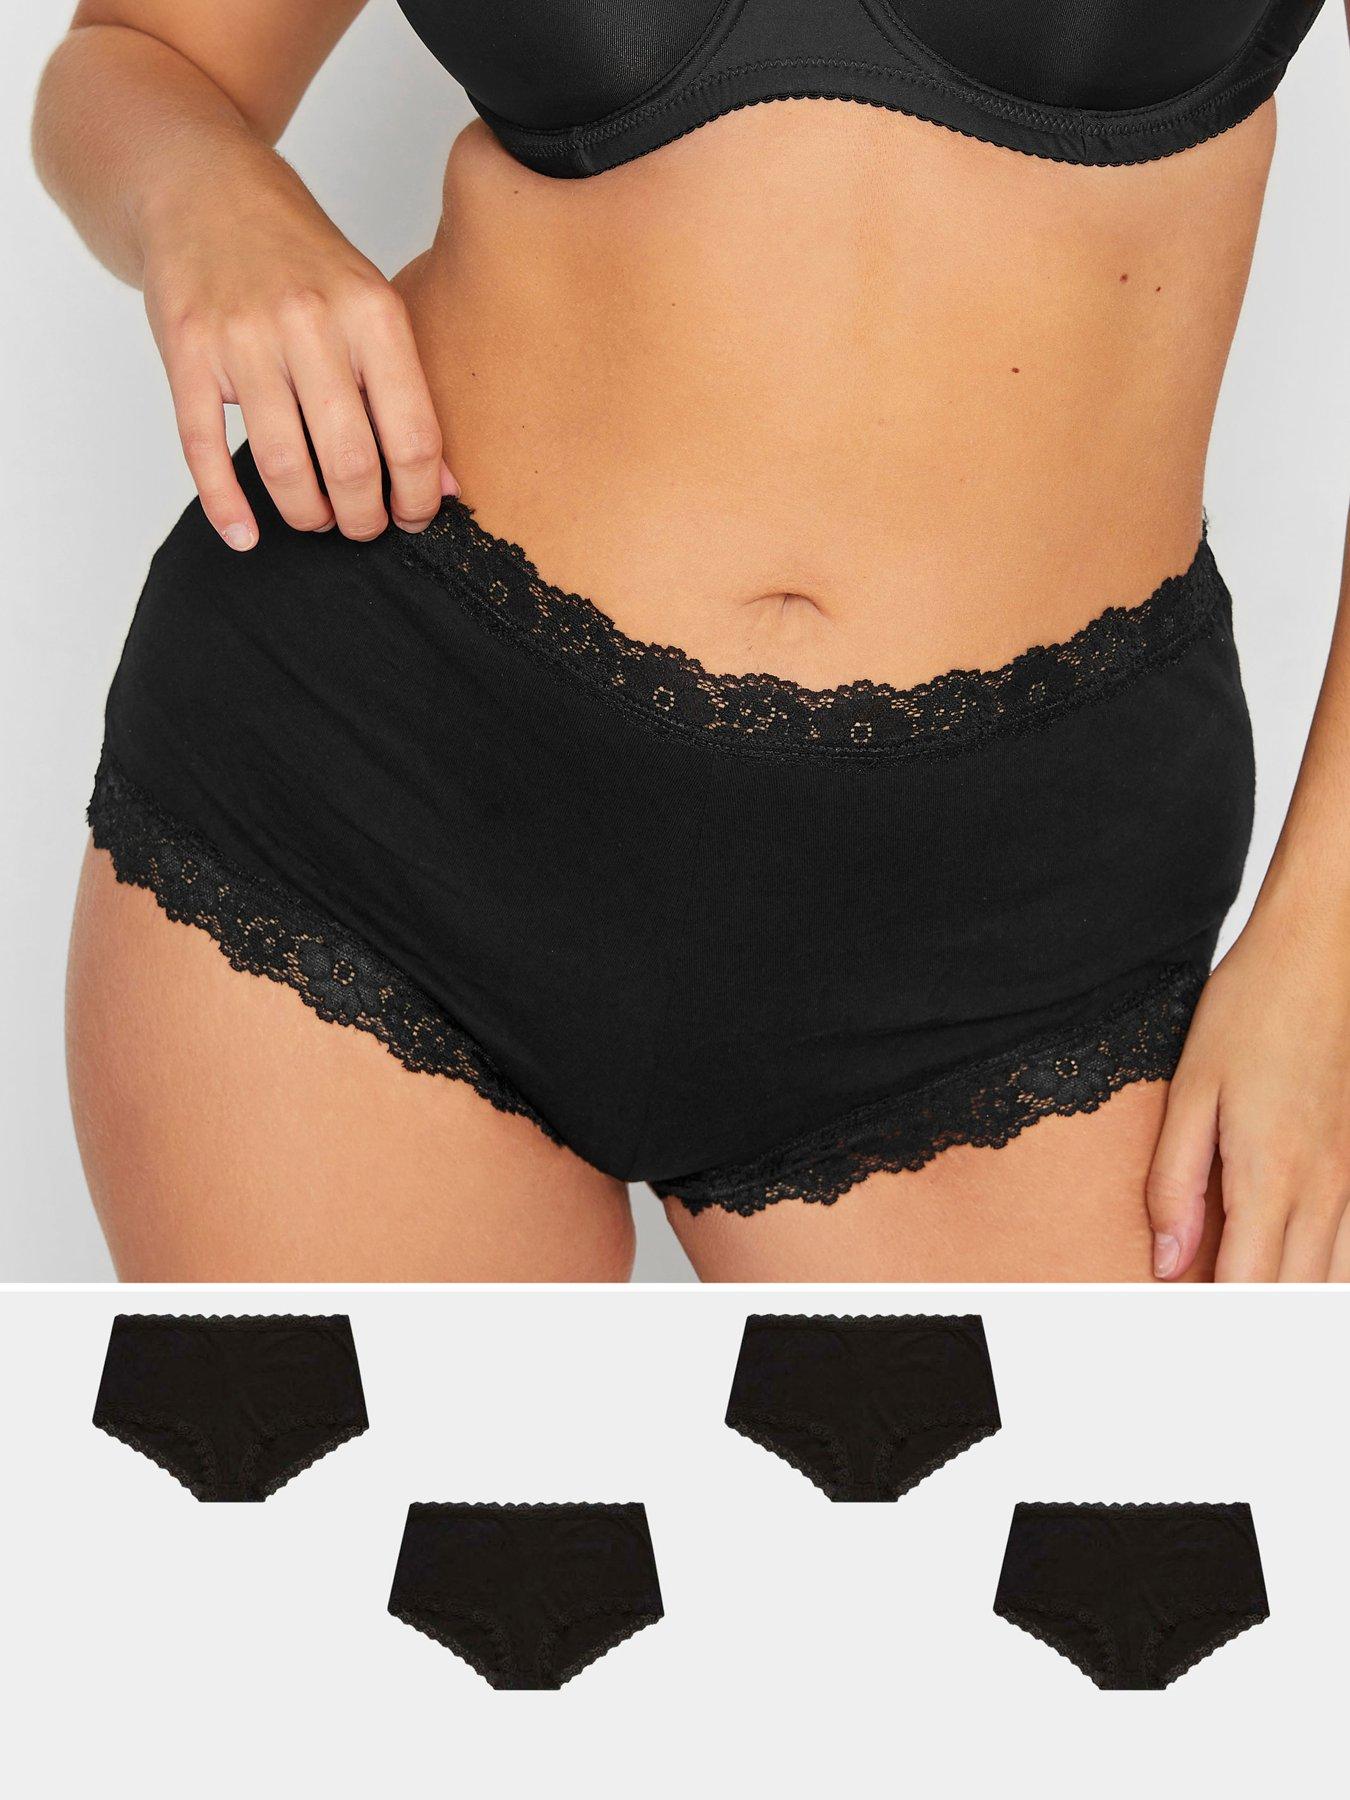 Charmo Women Nylon Bikini Panties Comfort Underwear Lace Trim Briefs 4 Pack